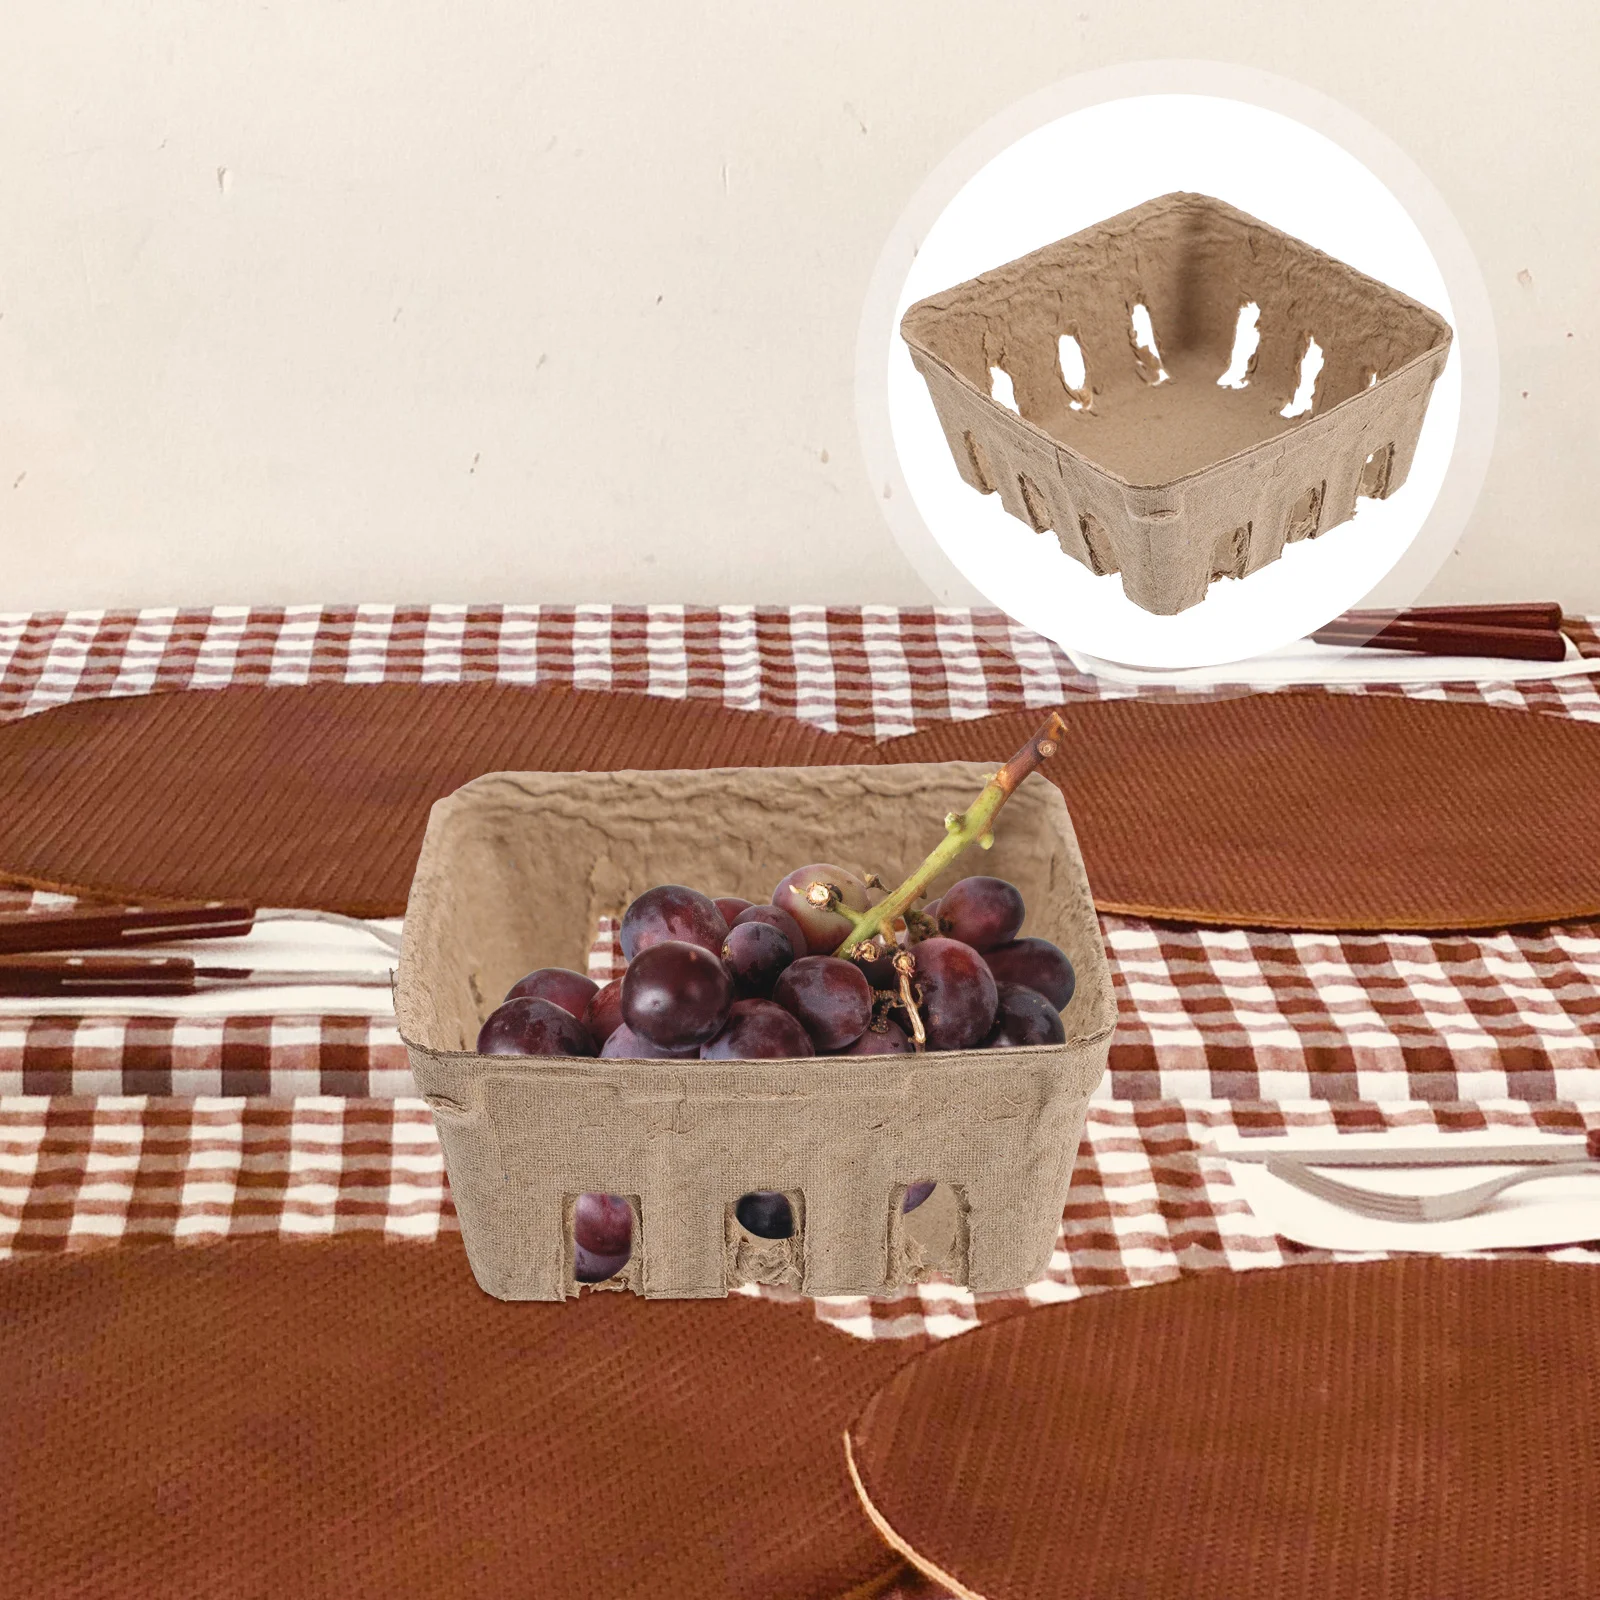 

50 Pcs Berry Containers Fridge Fruit Basket Produce Decor Storage Supplies Vegetable Tray Paper Pulp Convenient Strawberry